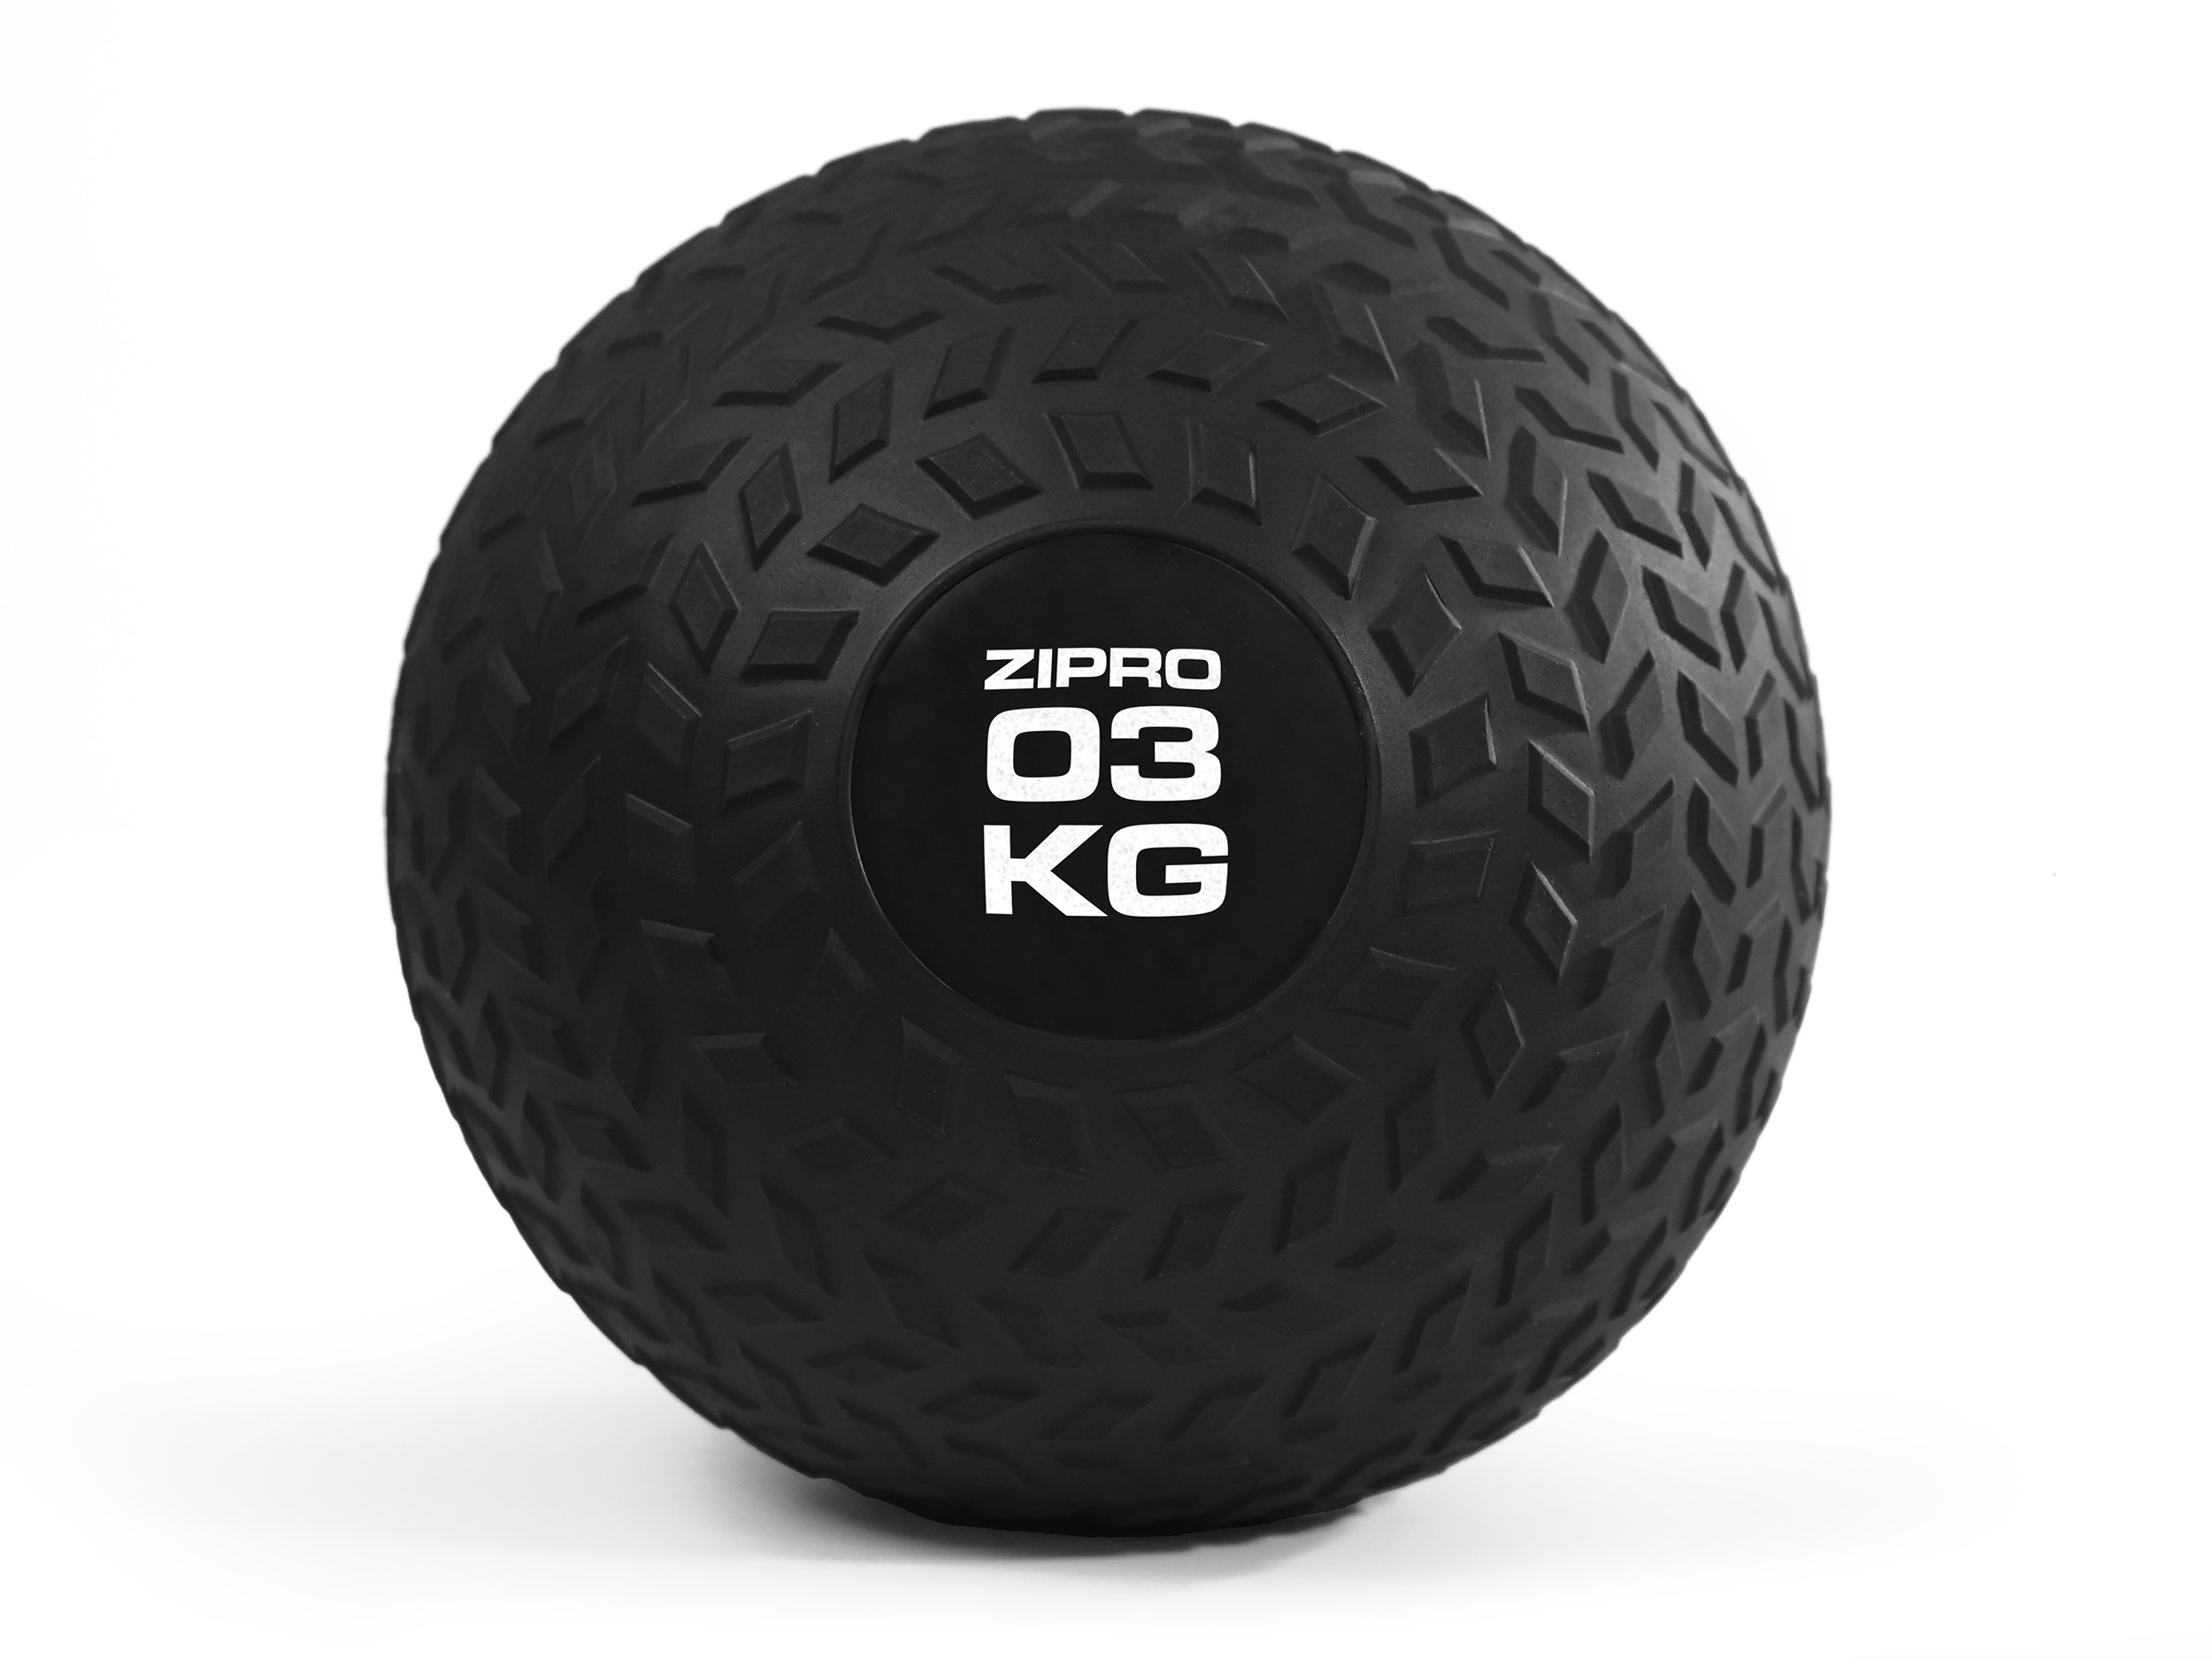 Zipro Pilka lekarska Slam Ball 3 kg 10947202 (5902659842527) bumba